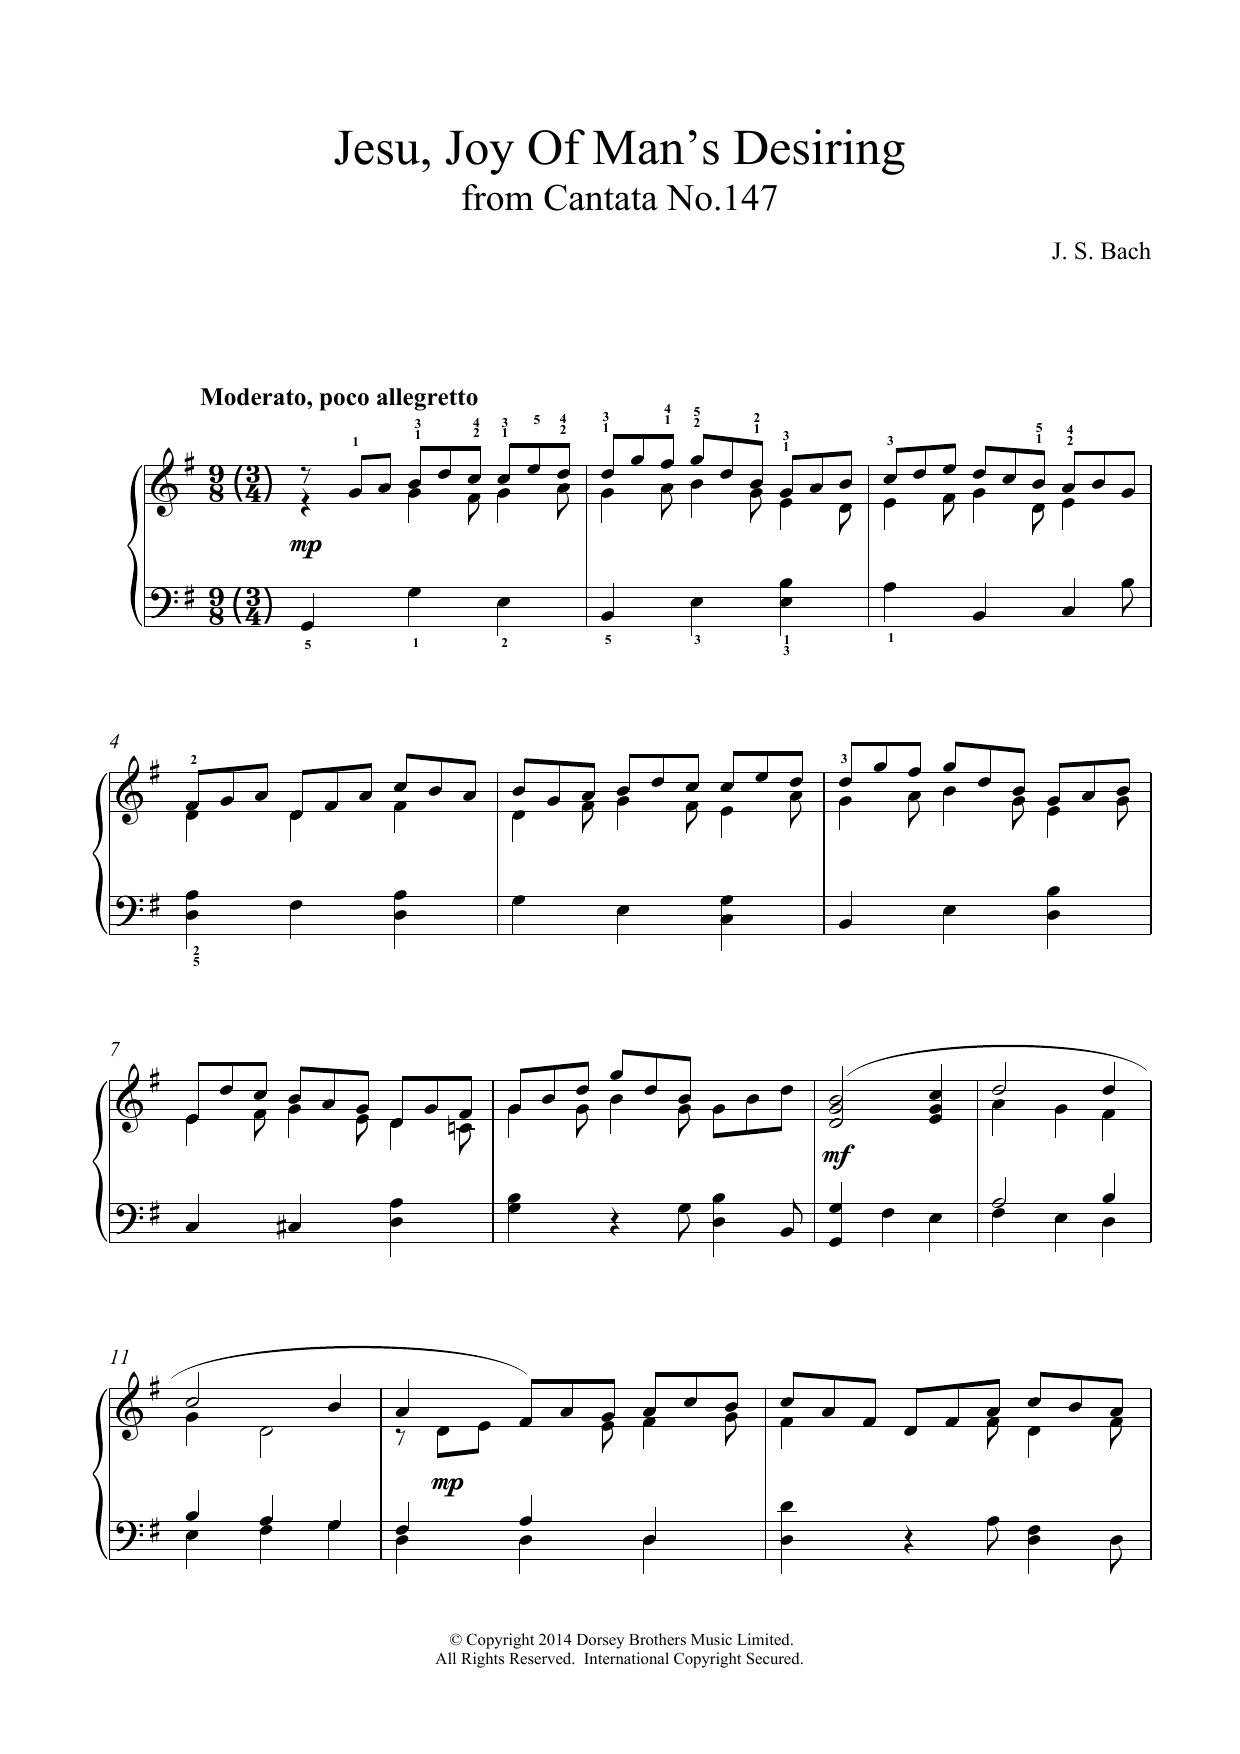 Johann Sebastian Bach Jesu, Joy Of Man's Desiring (from Cantata 147) Sheet Music Notes & Chords for Organ - Download or Print PDF